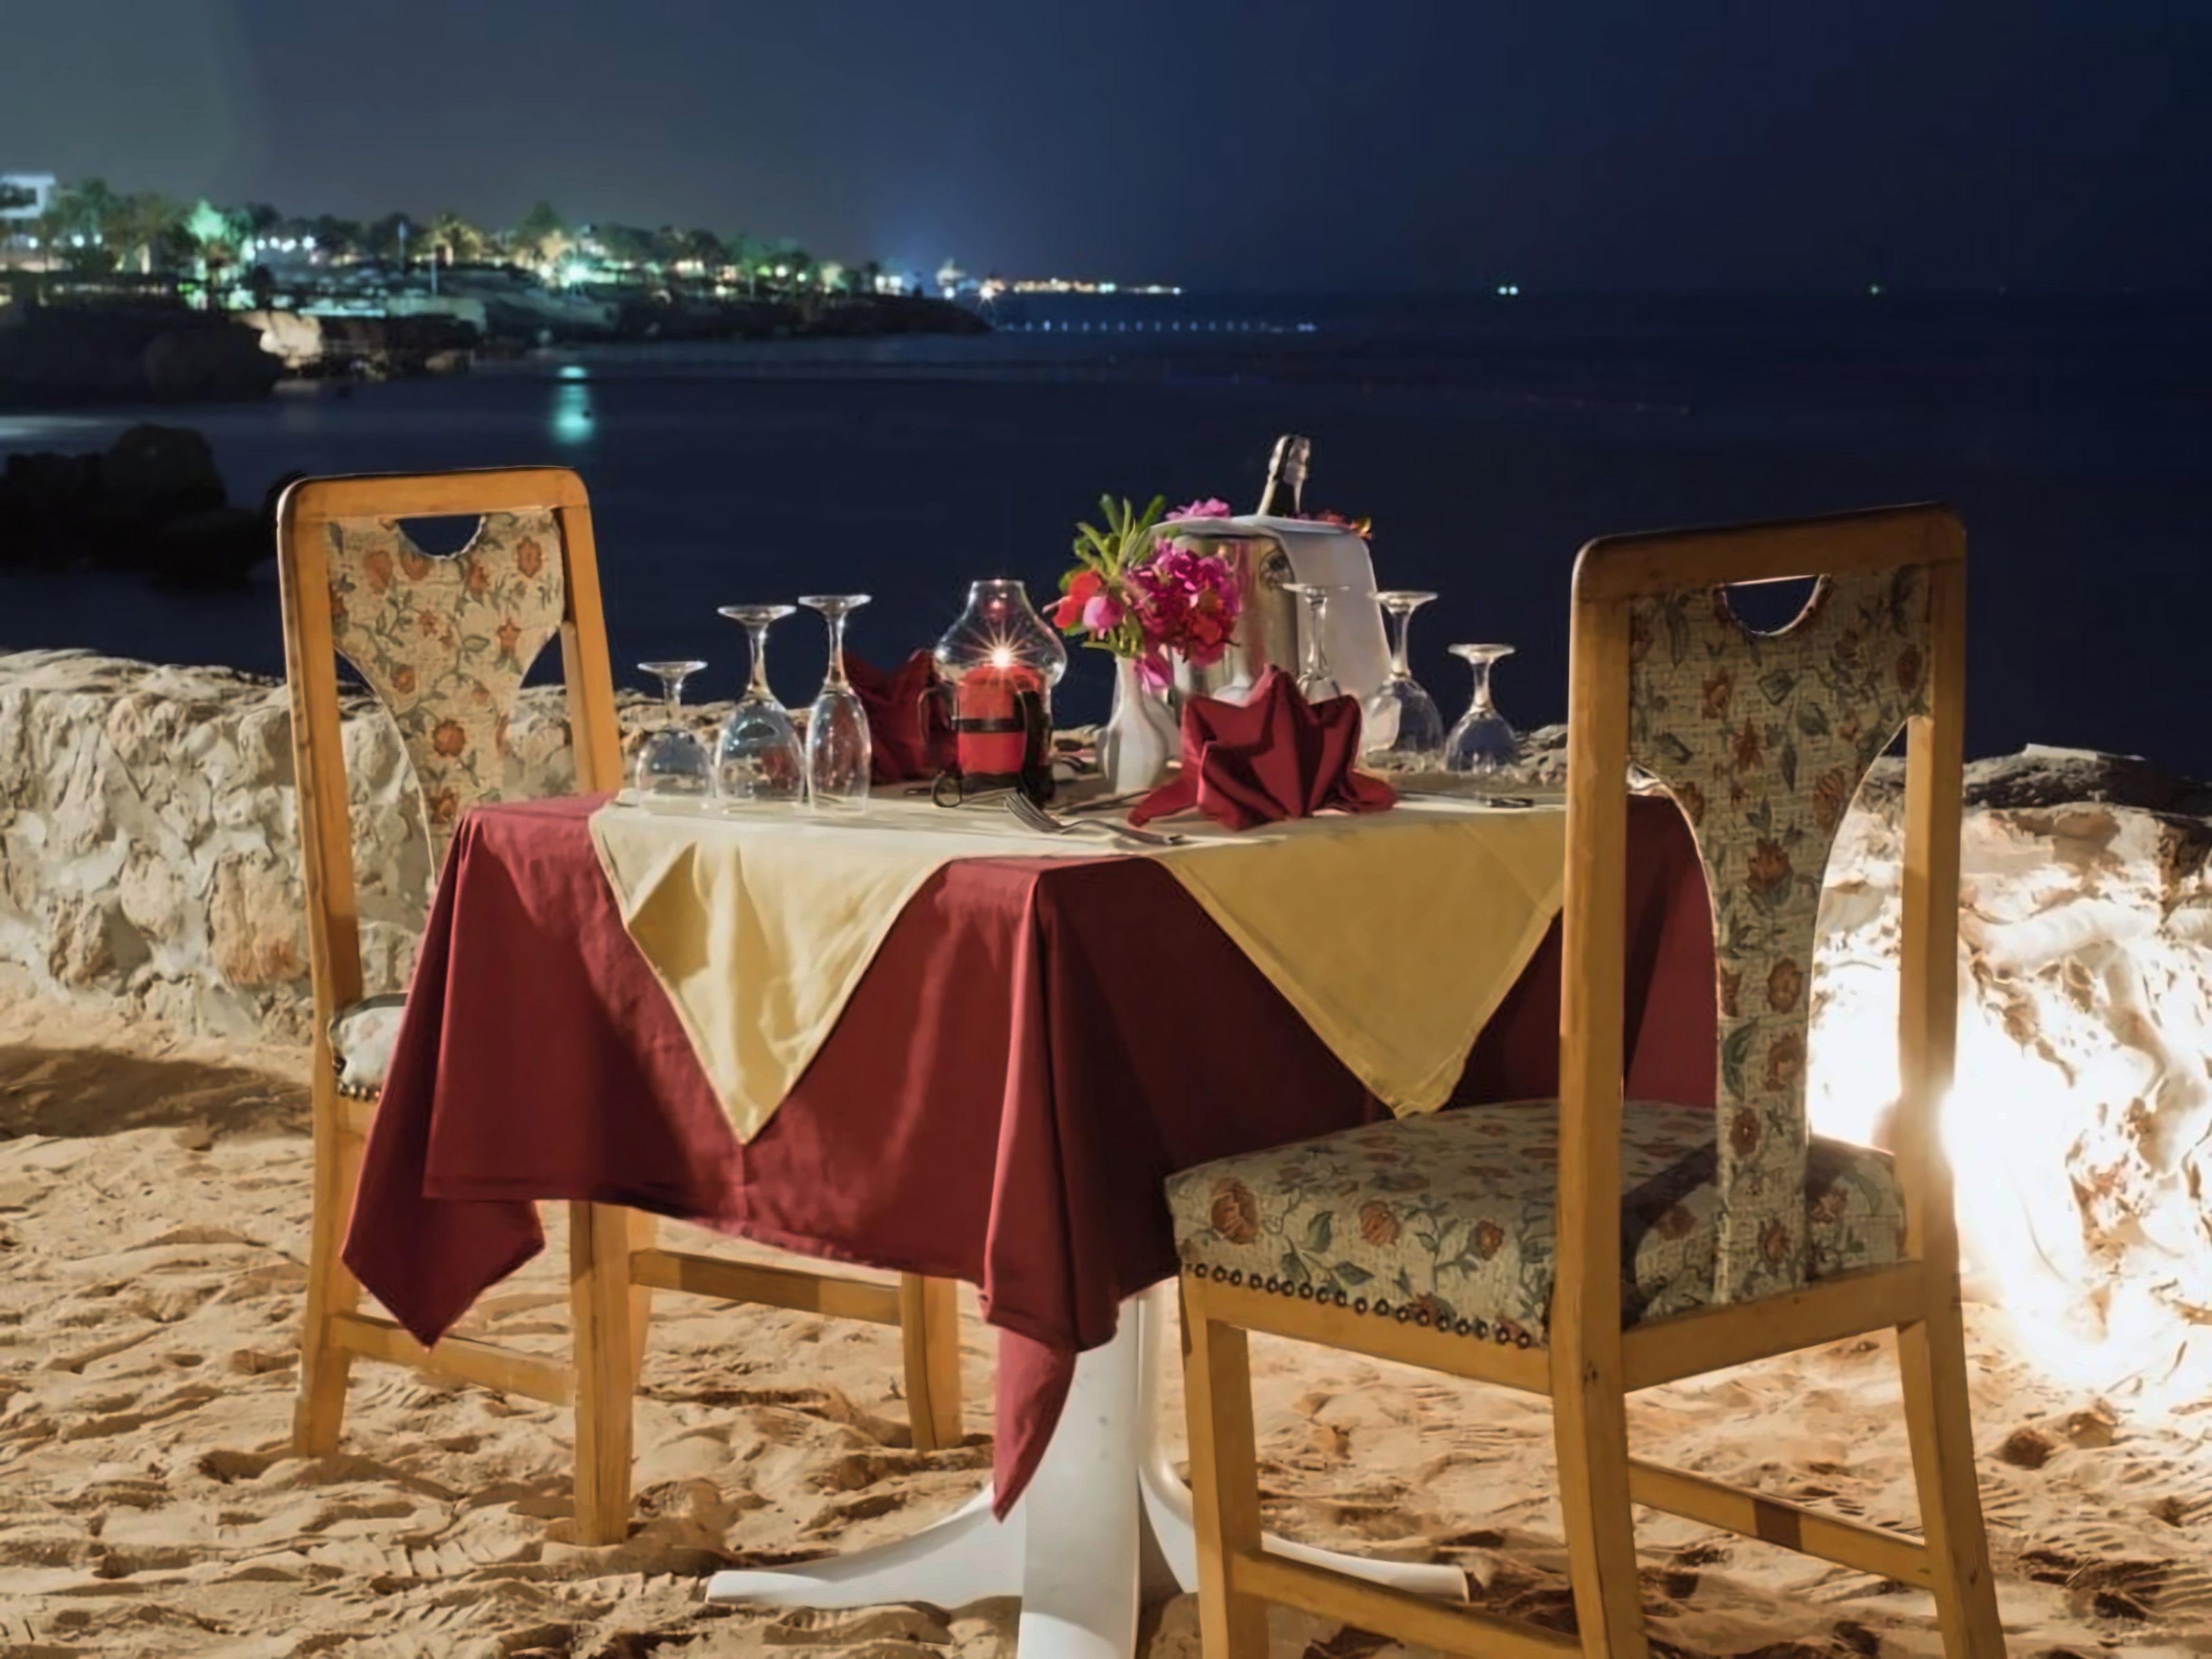 queen sharm resort beach 4 египет шарм эль шейх отель